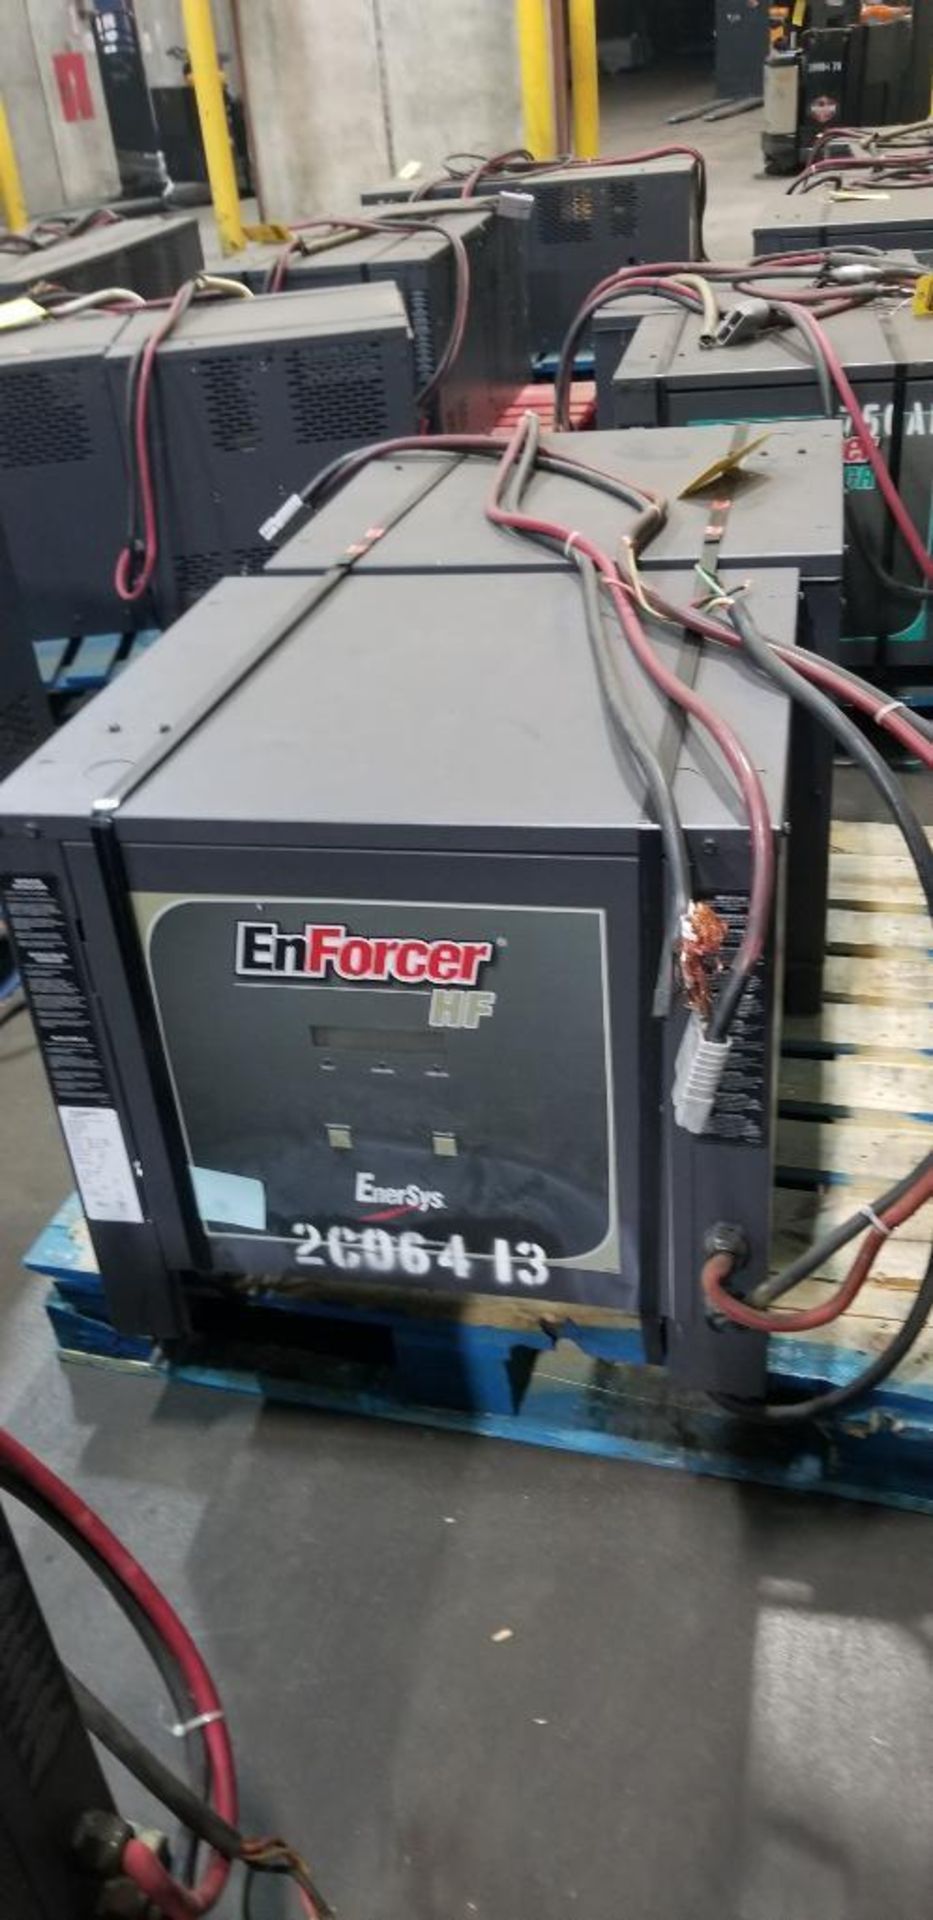 (2x) EnerSys Enforcer Battery Chargers, Model EH3-12-900, Input: 480V, 3-Phase, Output: 24V, 145 Amp - Image 3 of 6